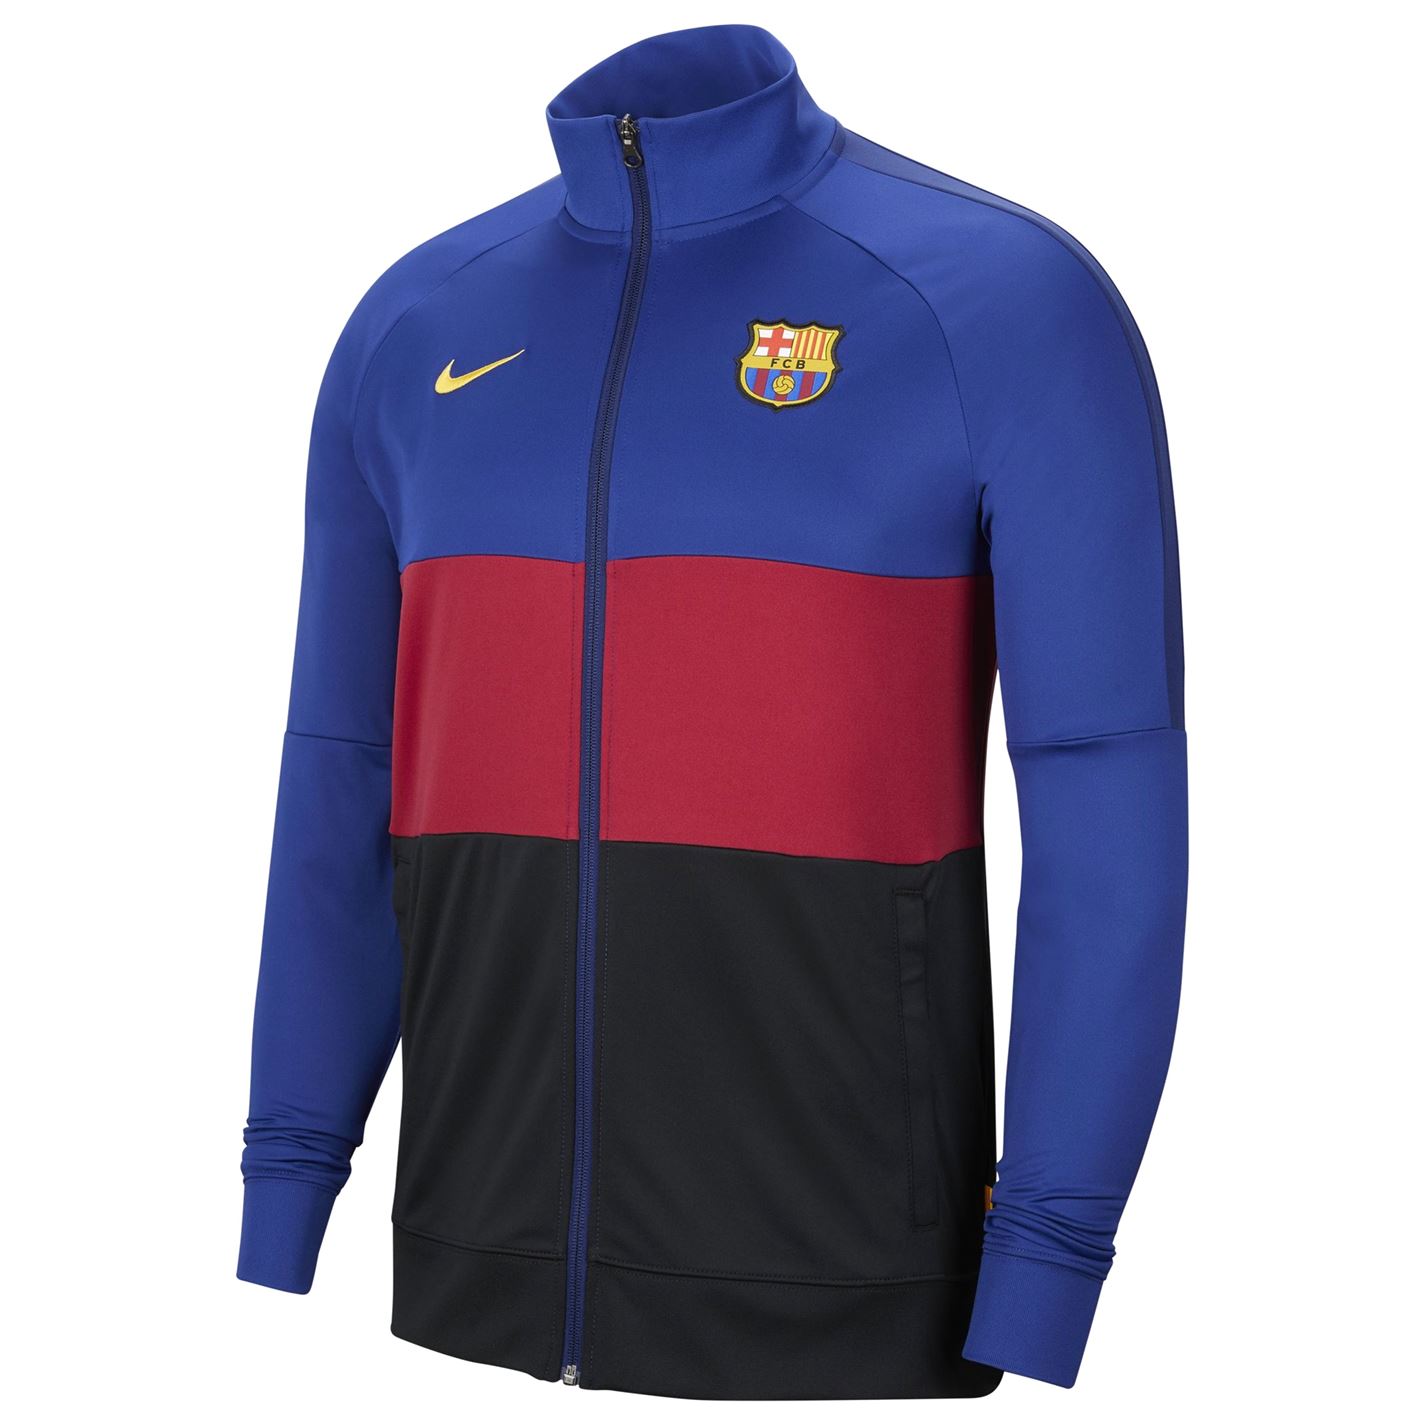 Jacheta Nike FC Barcelona barbat